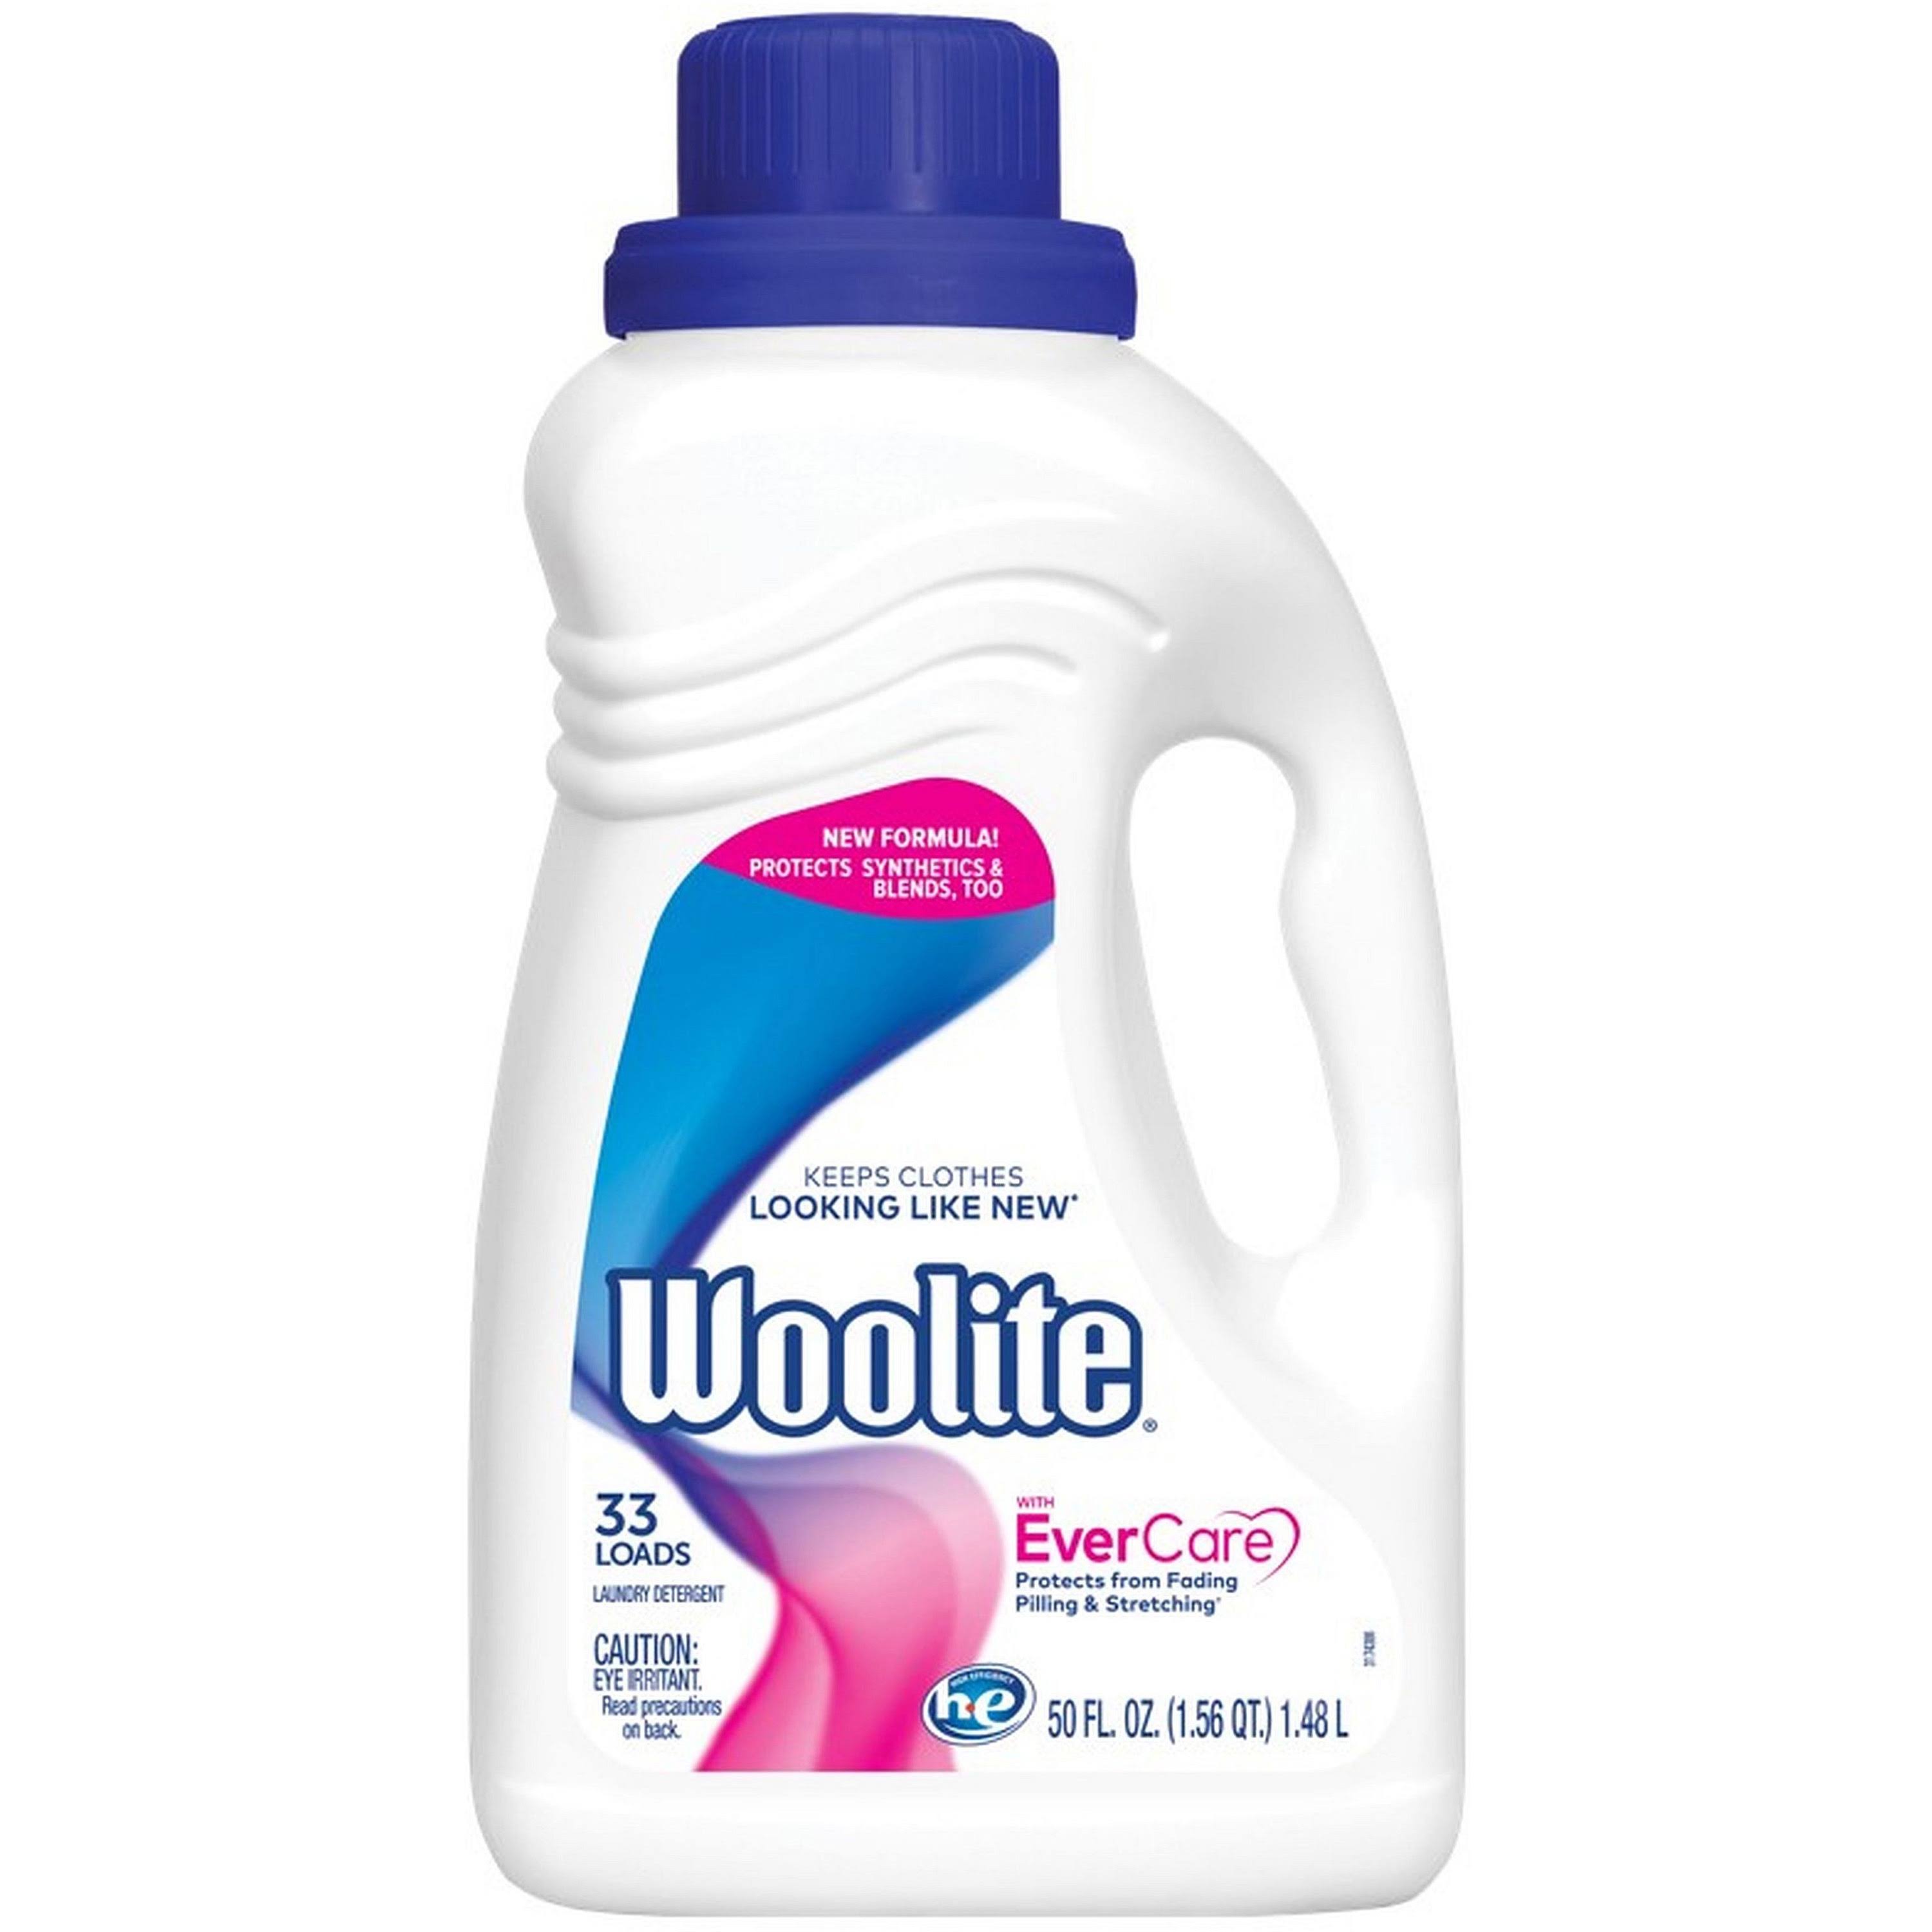 Woolite Gentle Cycle Laundry Detergent